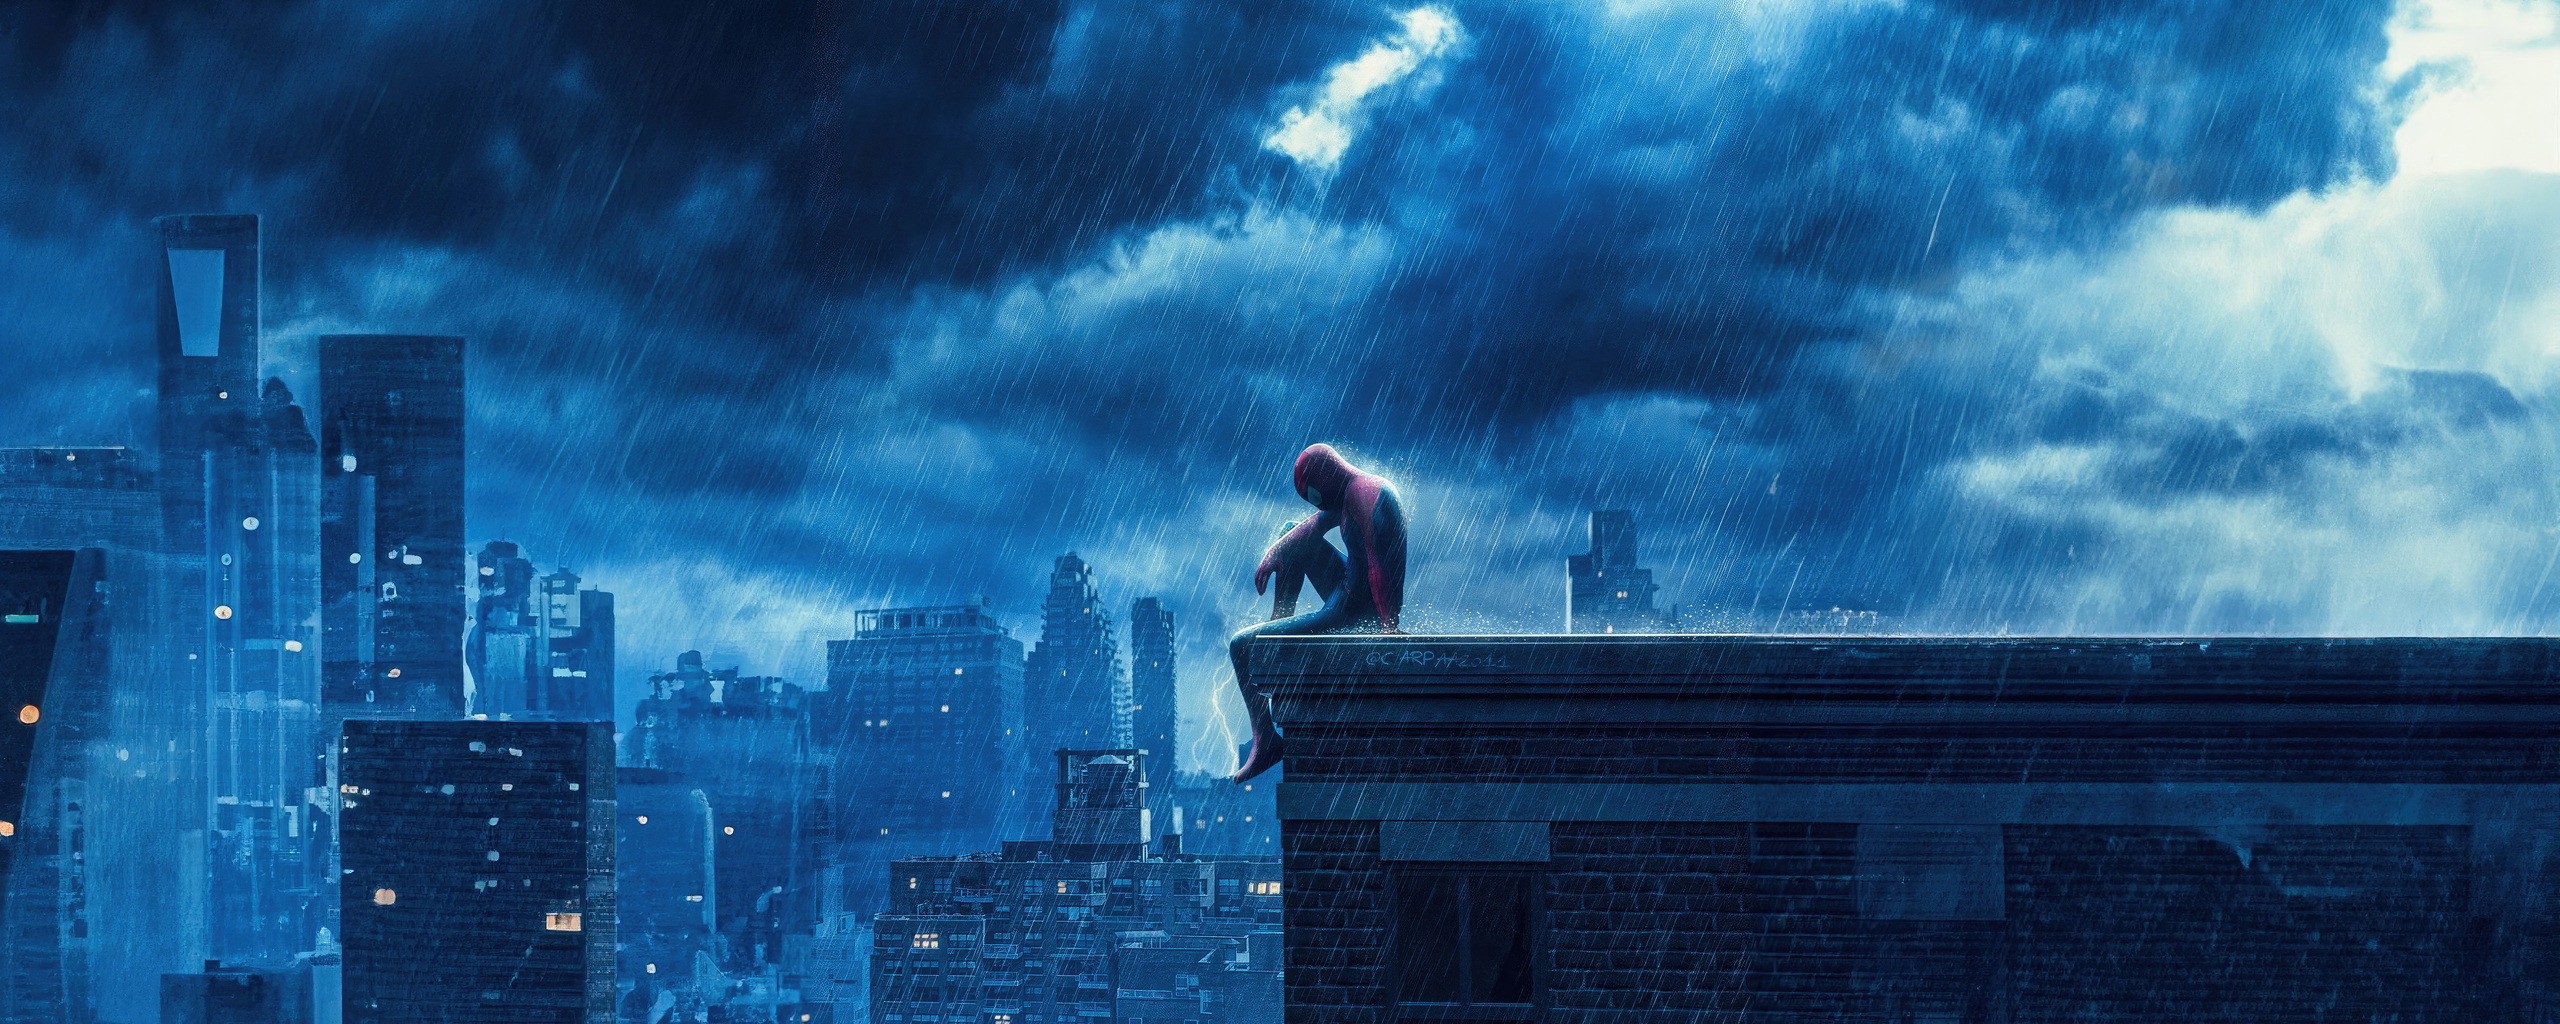 spiderman-sitting-on-city-rooftop-in-rain-tn.jpg